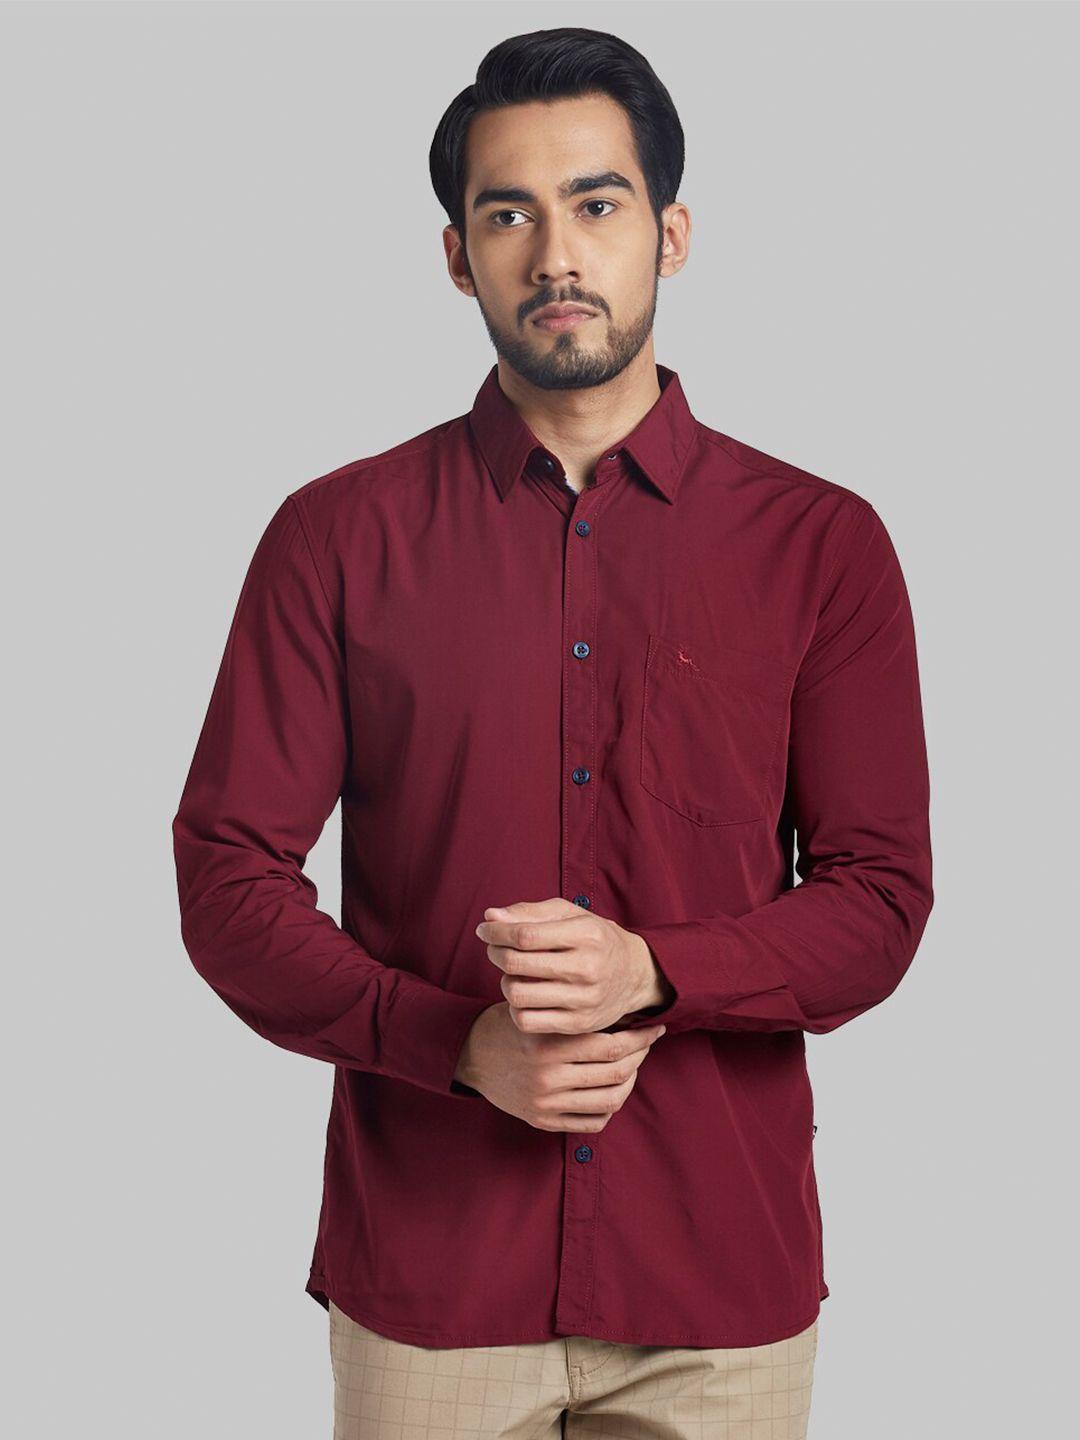 parx-men-red-slim-fit-casual-shirt